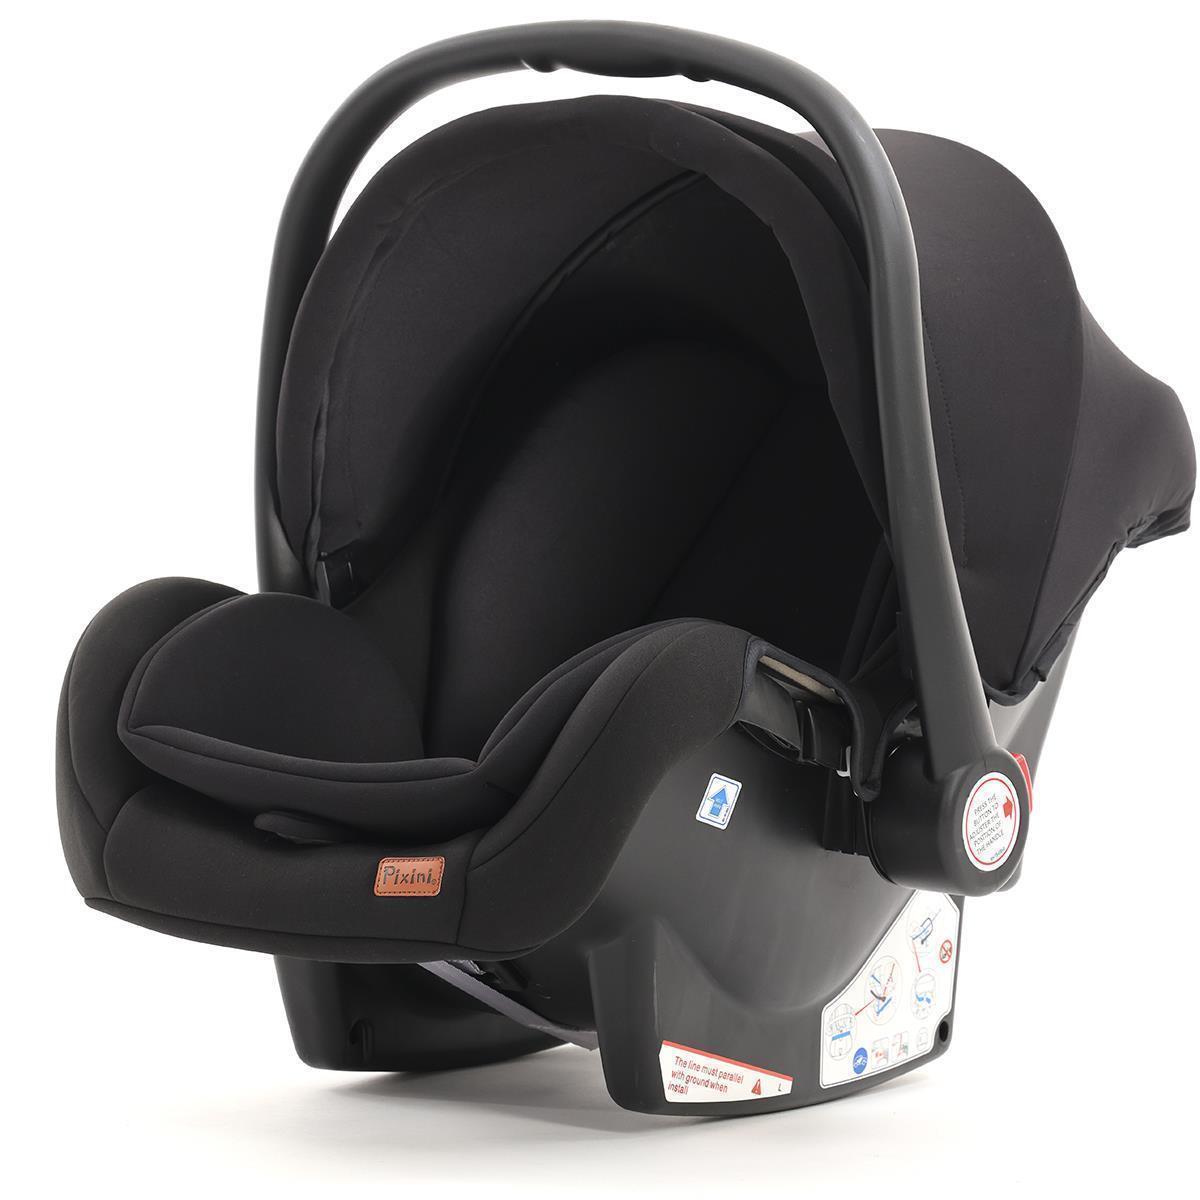 Pixini Aluna Babyschale 0 -13Kg schwarz, Kindersitze & Zubehör